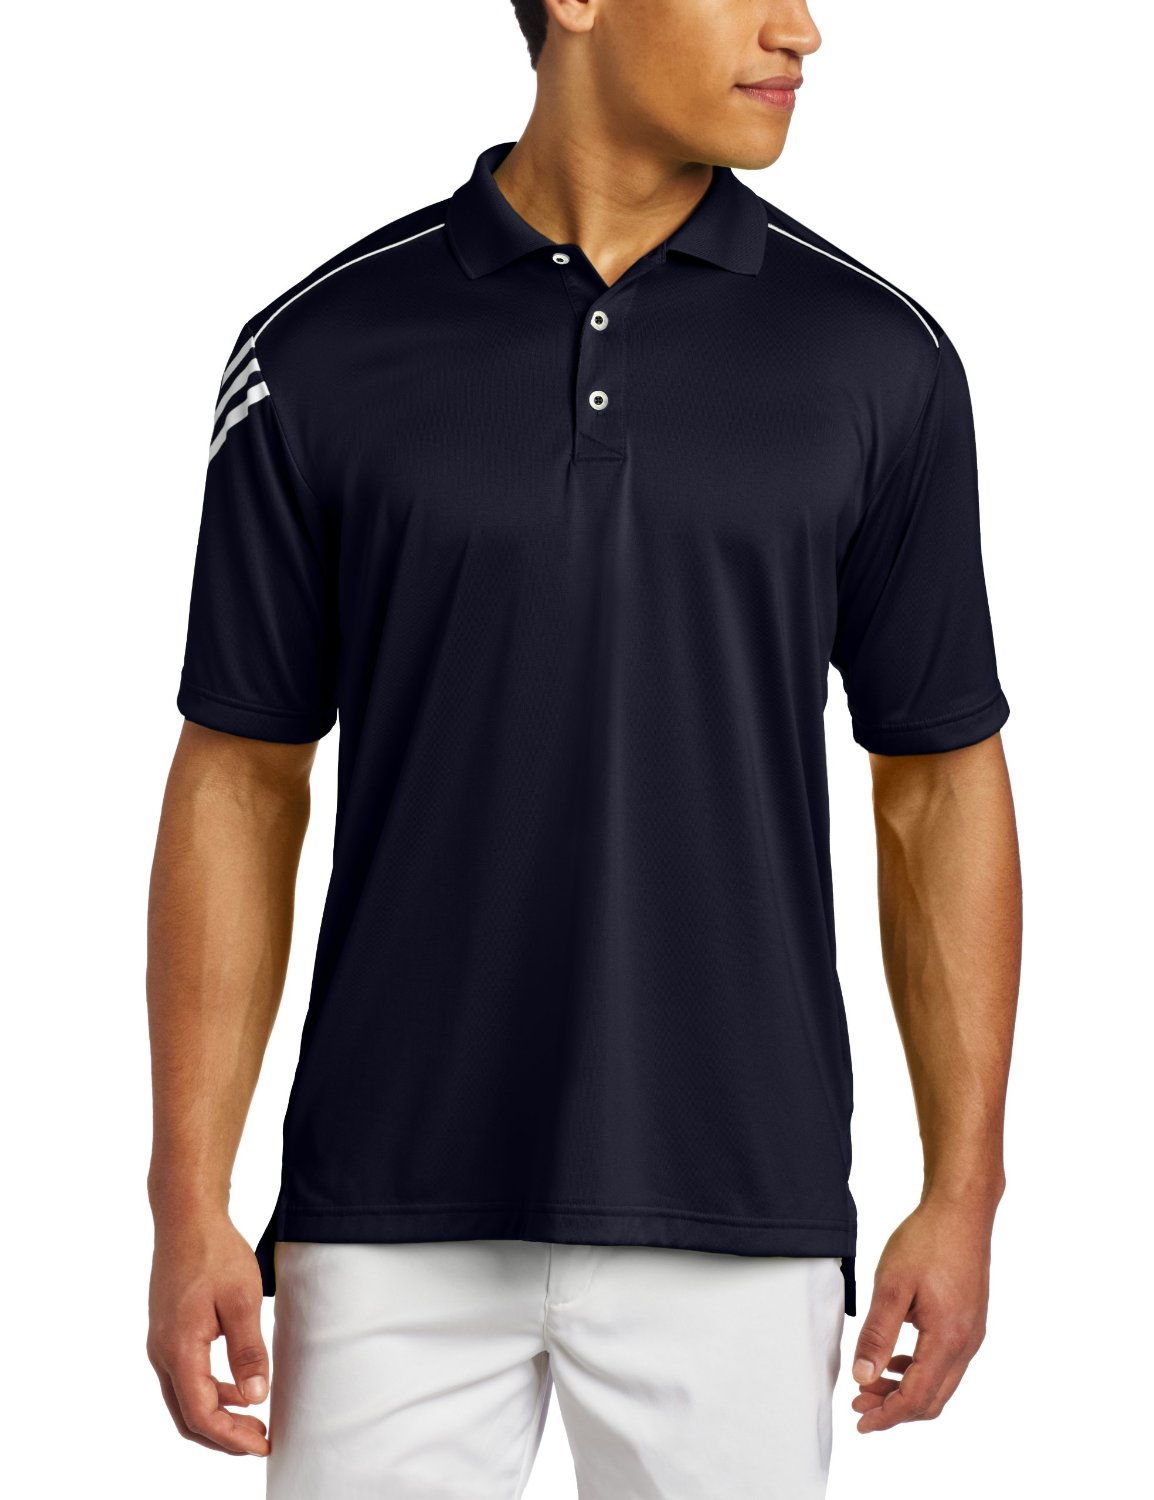 Mens ClimaCool 3 Stripes Golf Polo Shirts